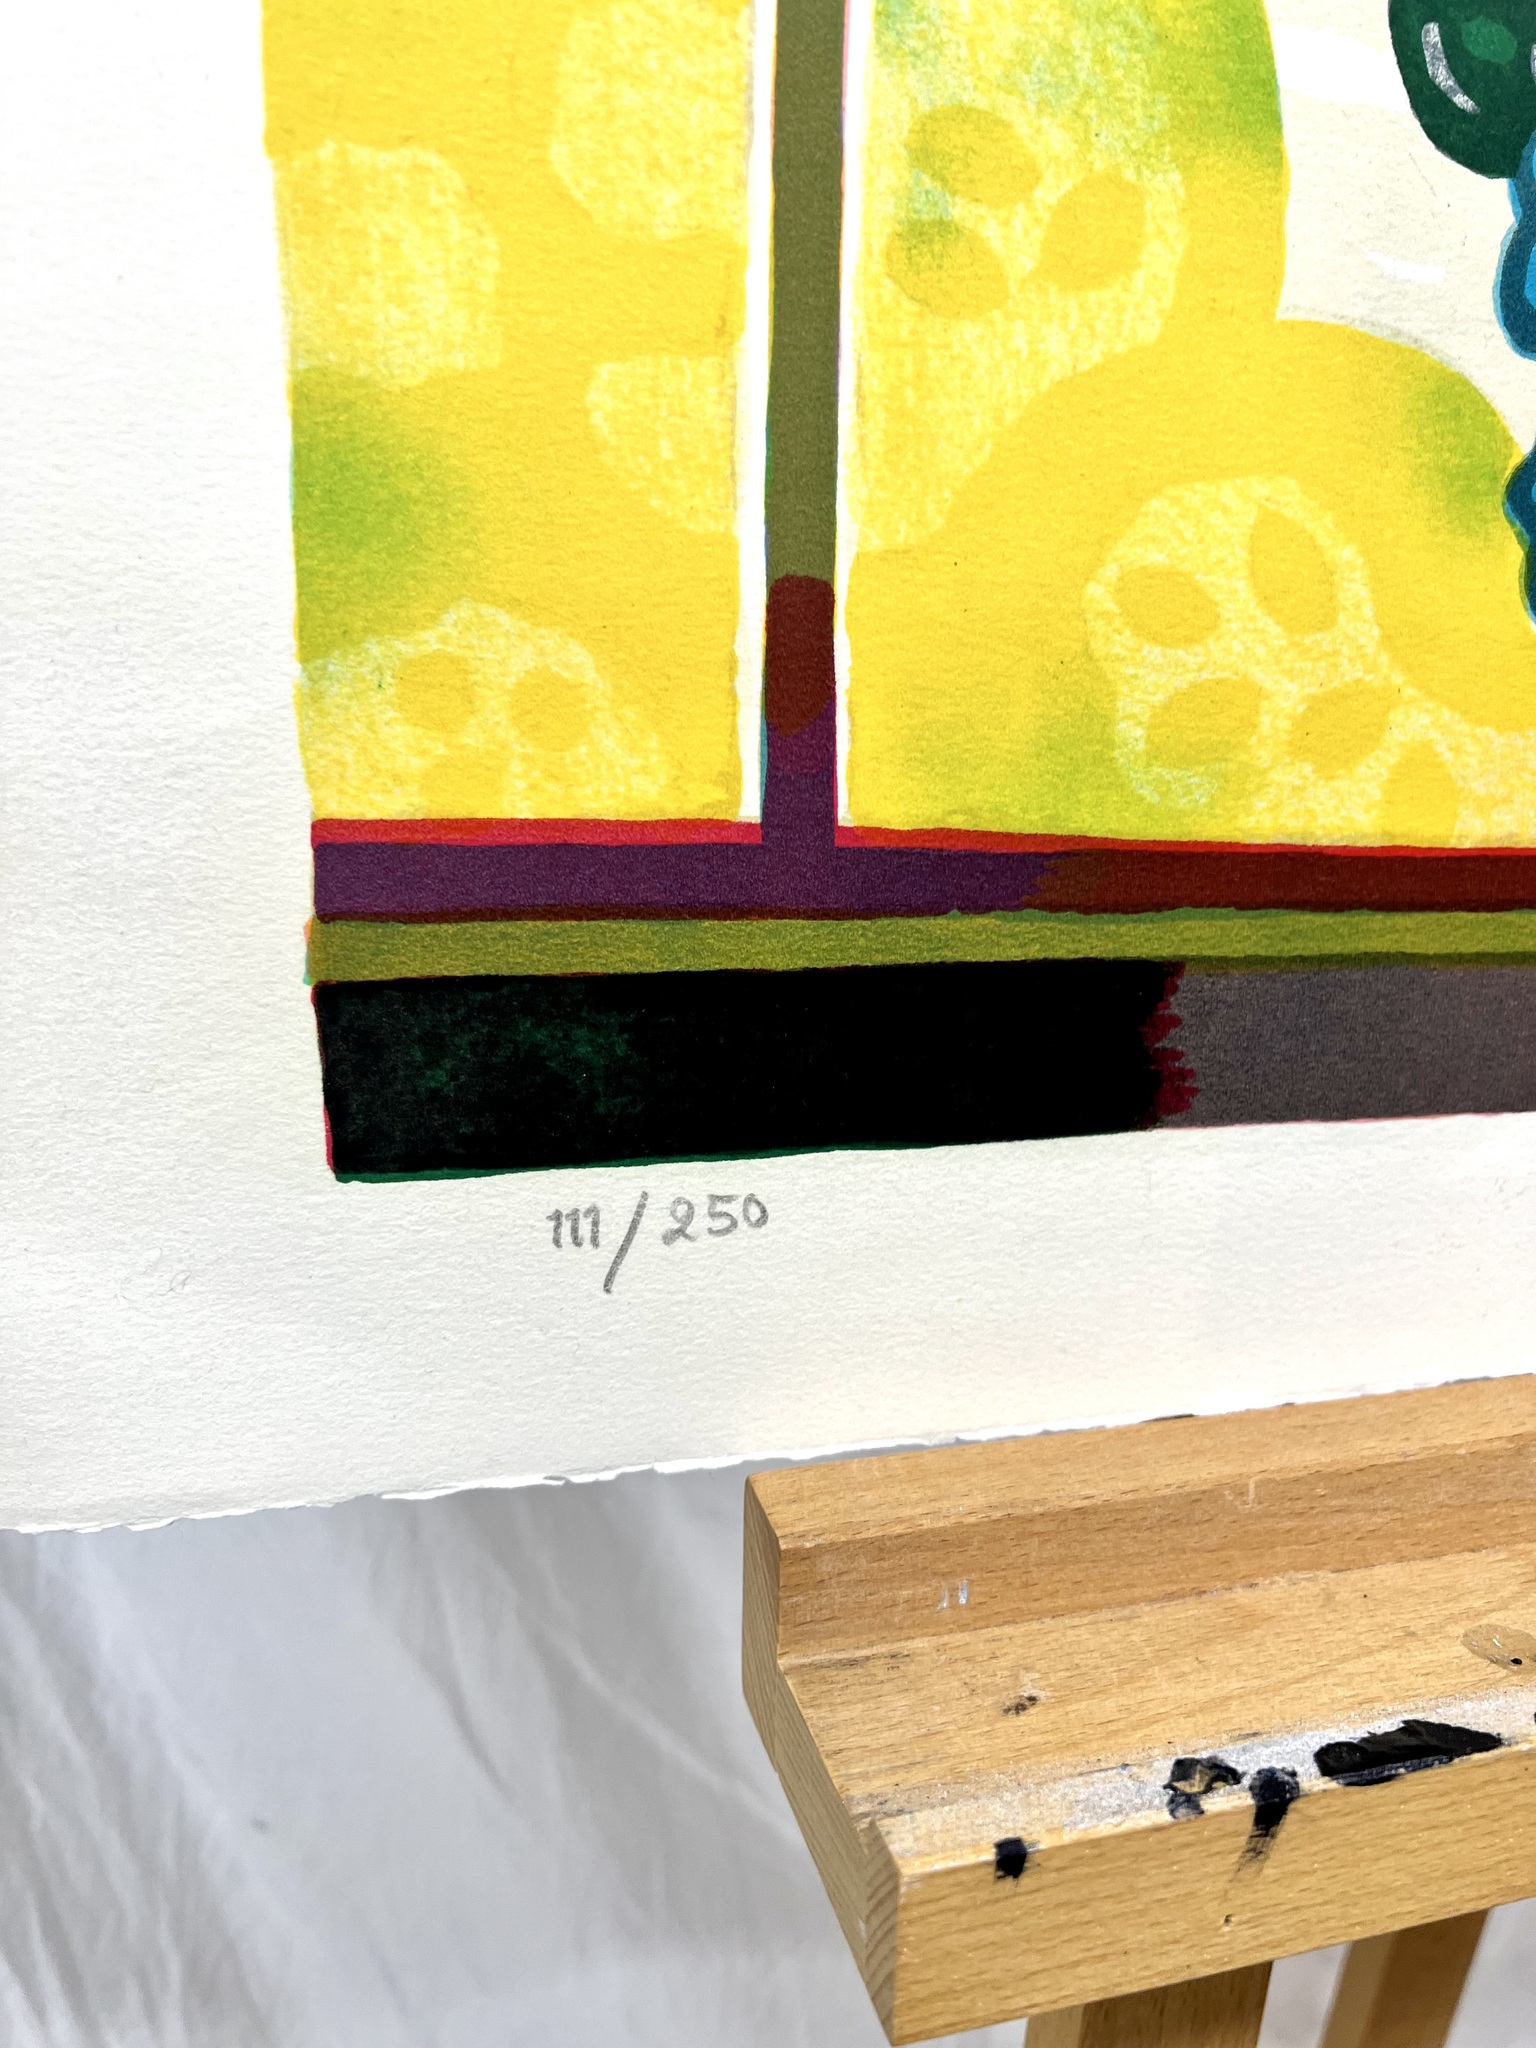 Guy Charon "Vase" Litografi, signerad, numrerad 111/250. 76x56 cm